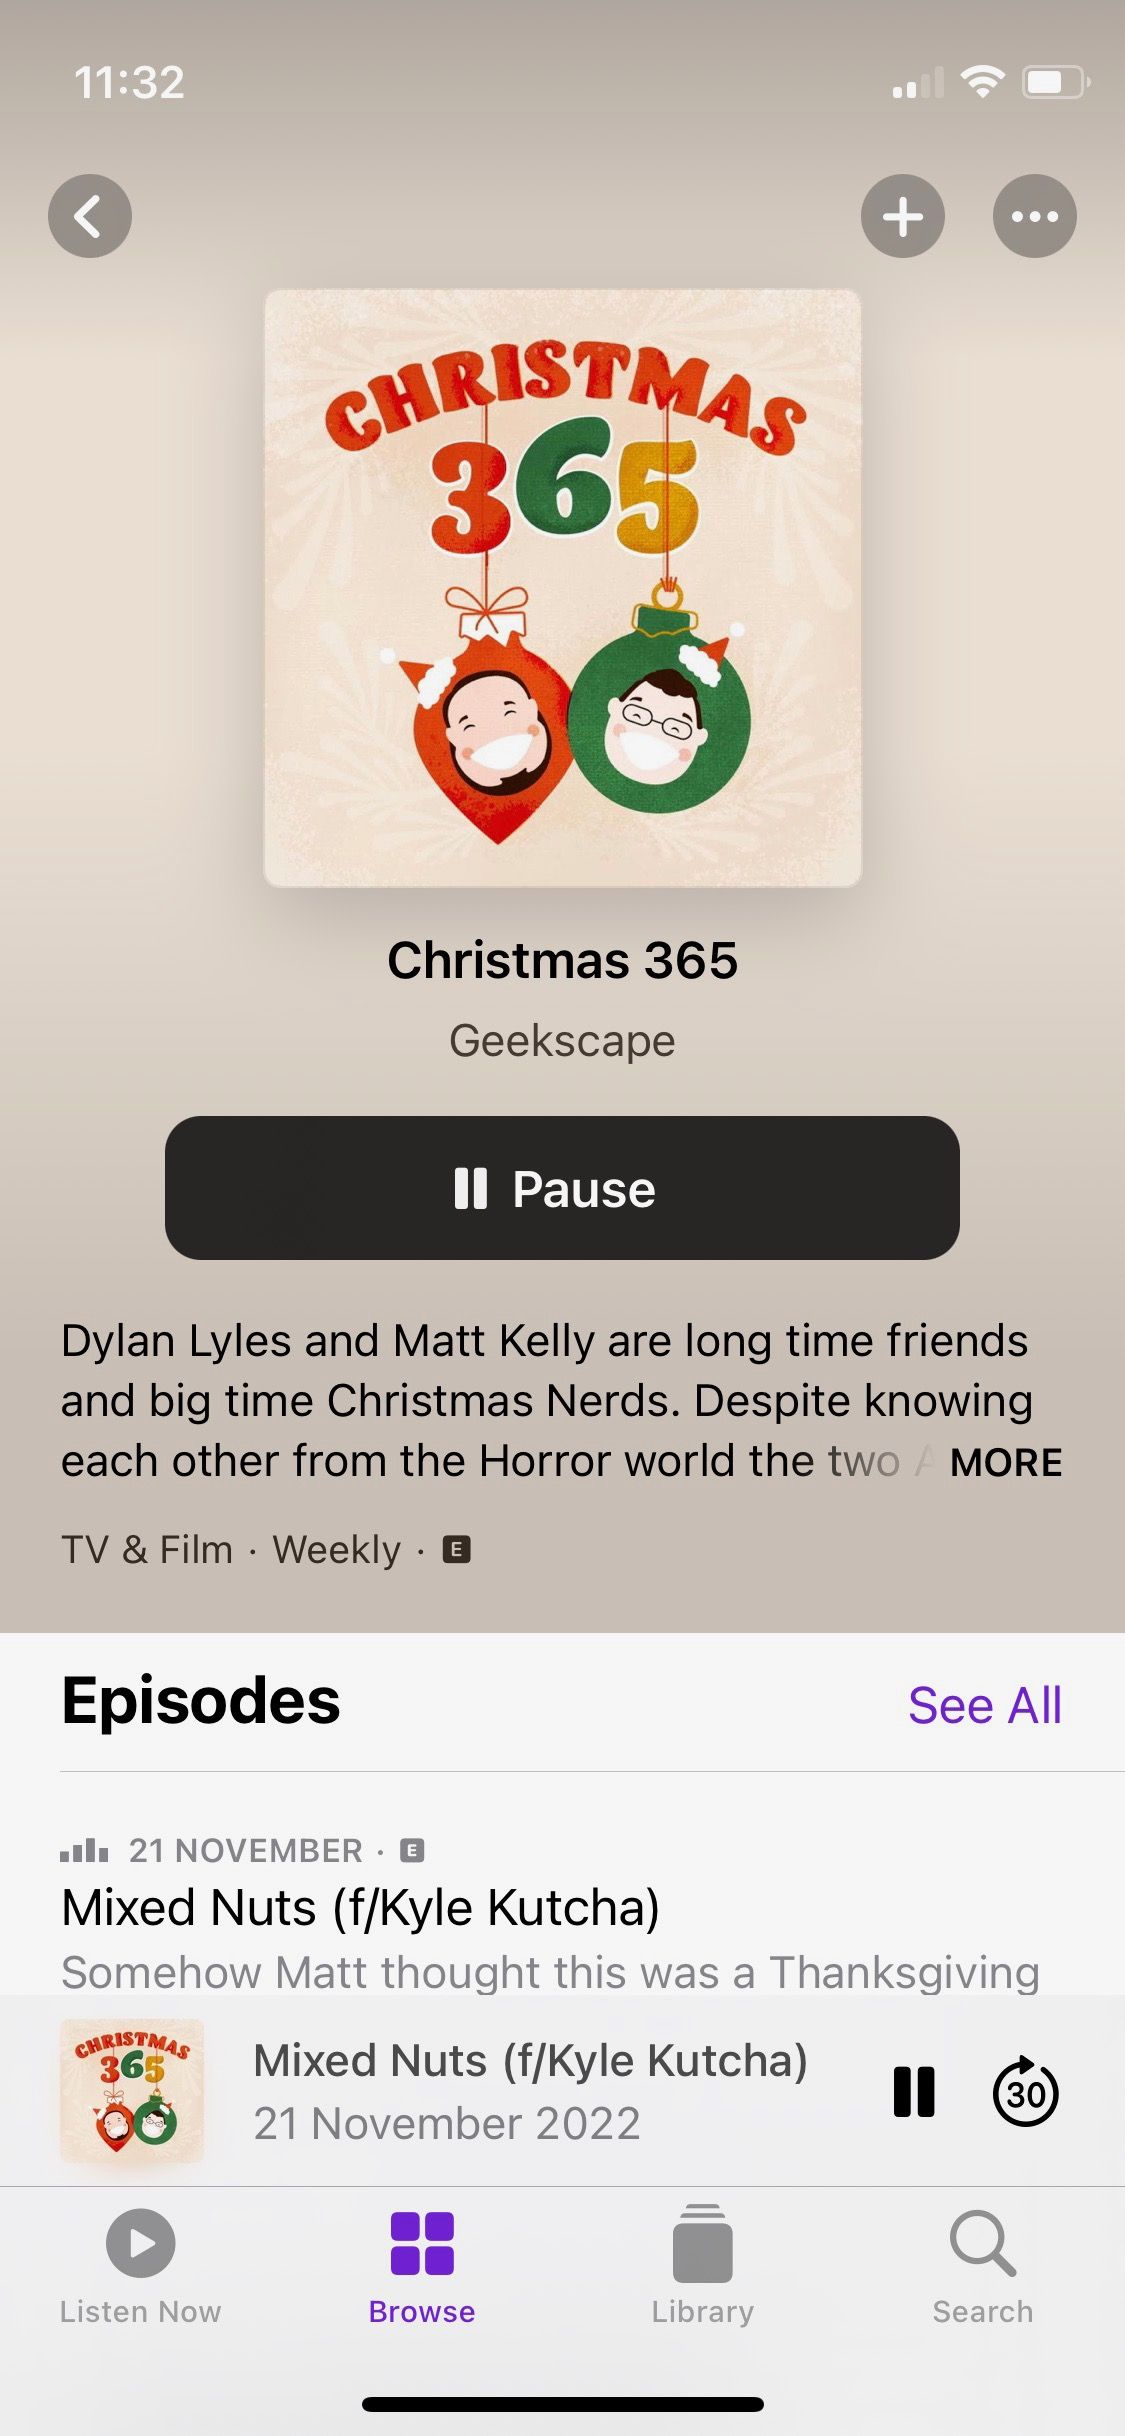 Screenshot of the Christmas 365 podcast home screen